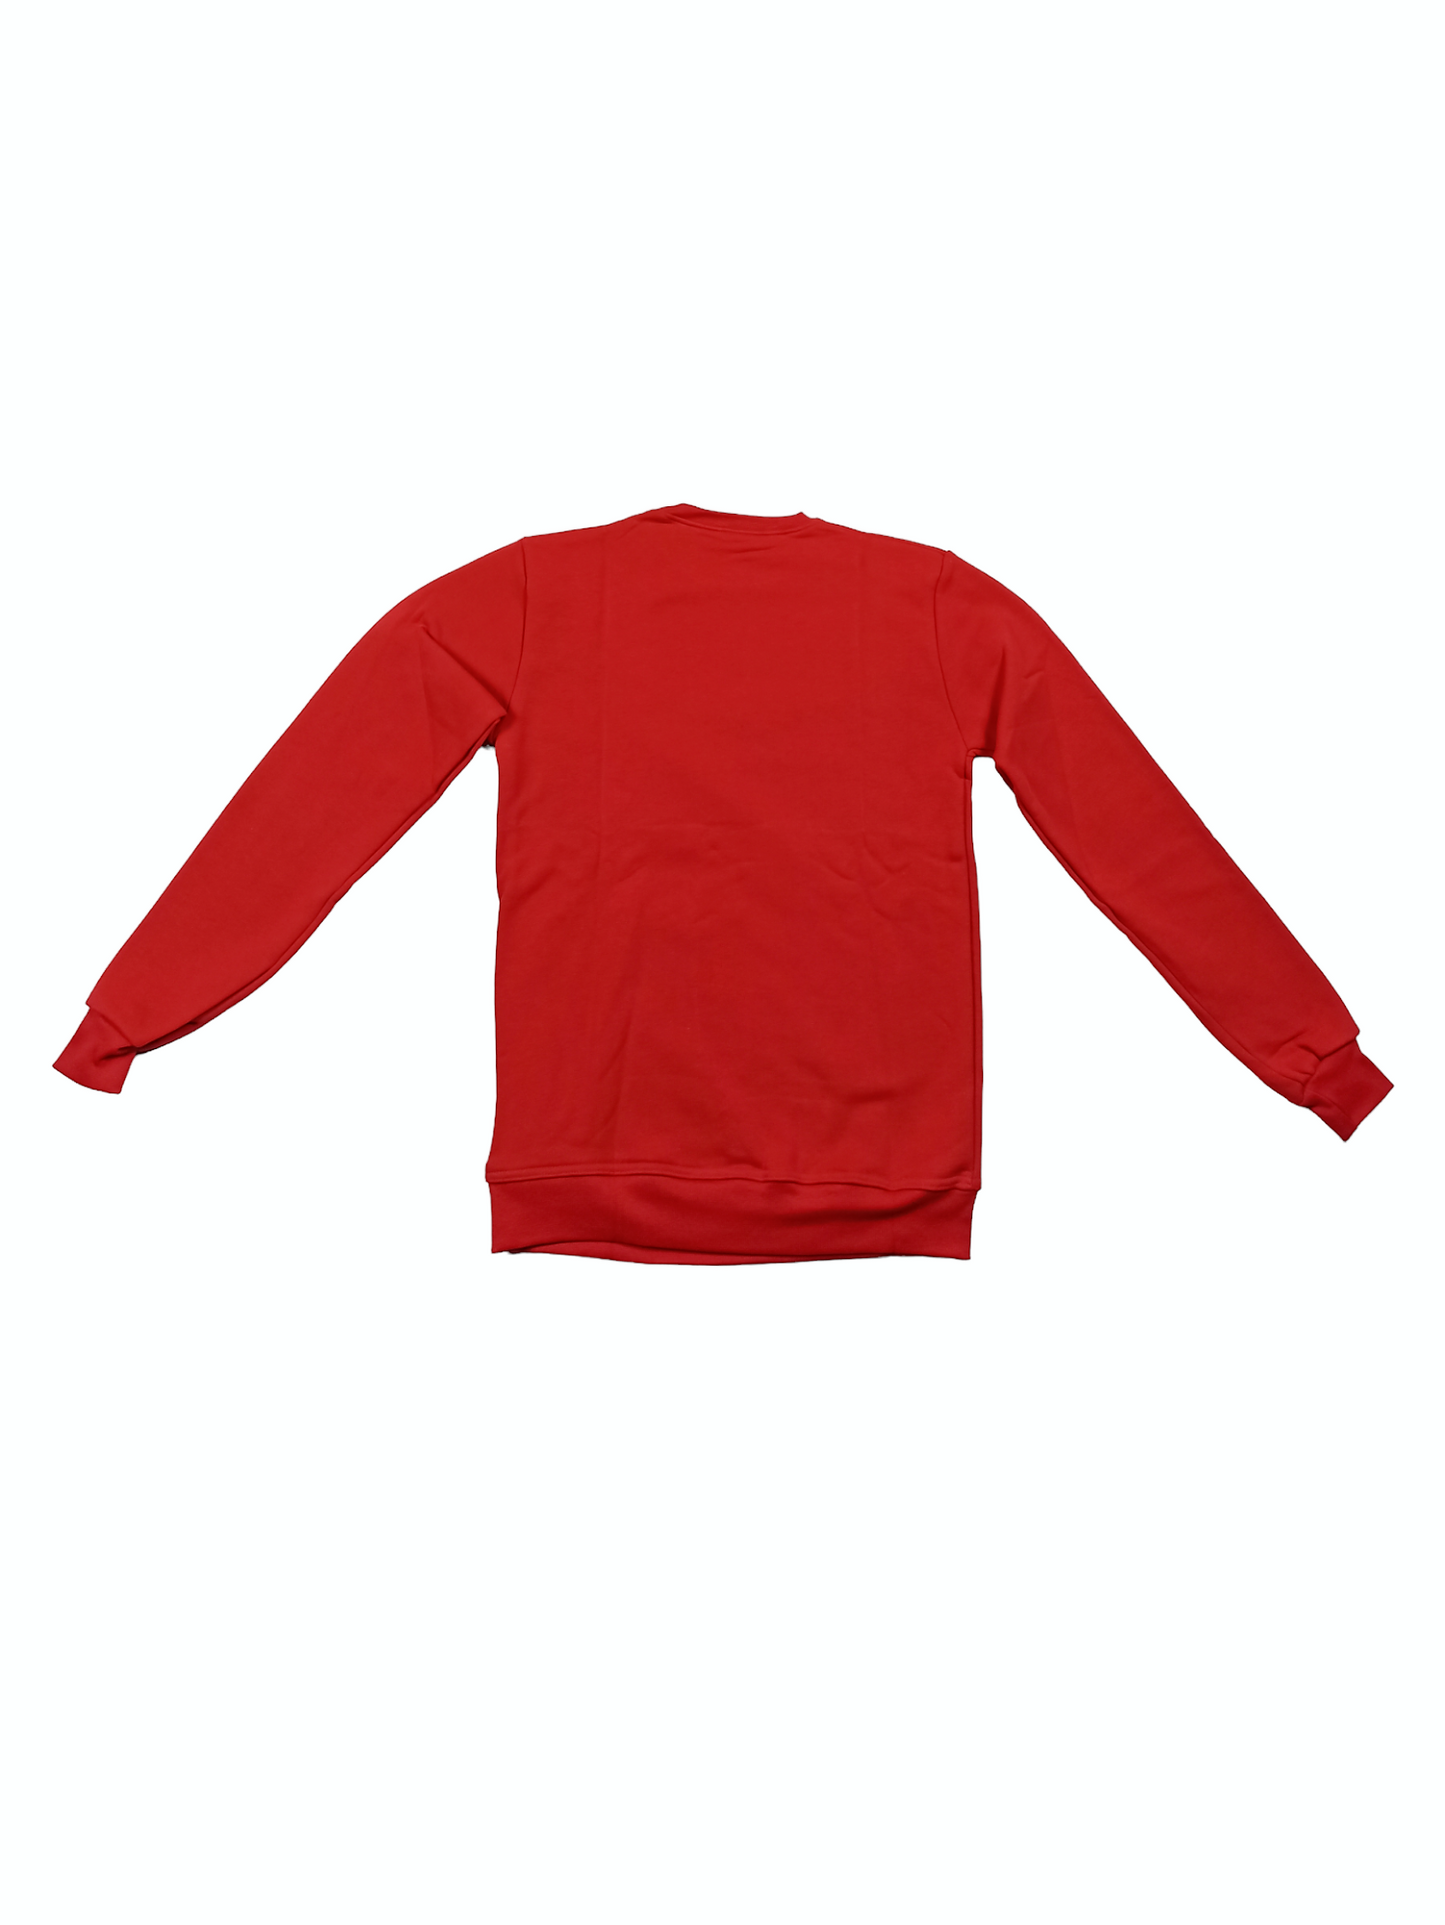 Sweatshirts for women and men cotton Qoolst clothing